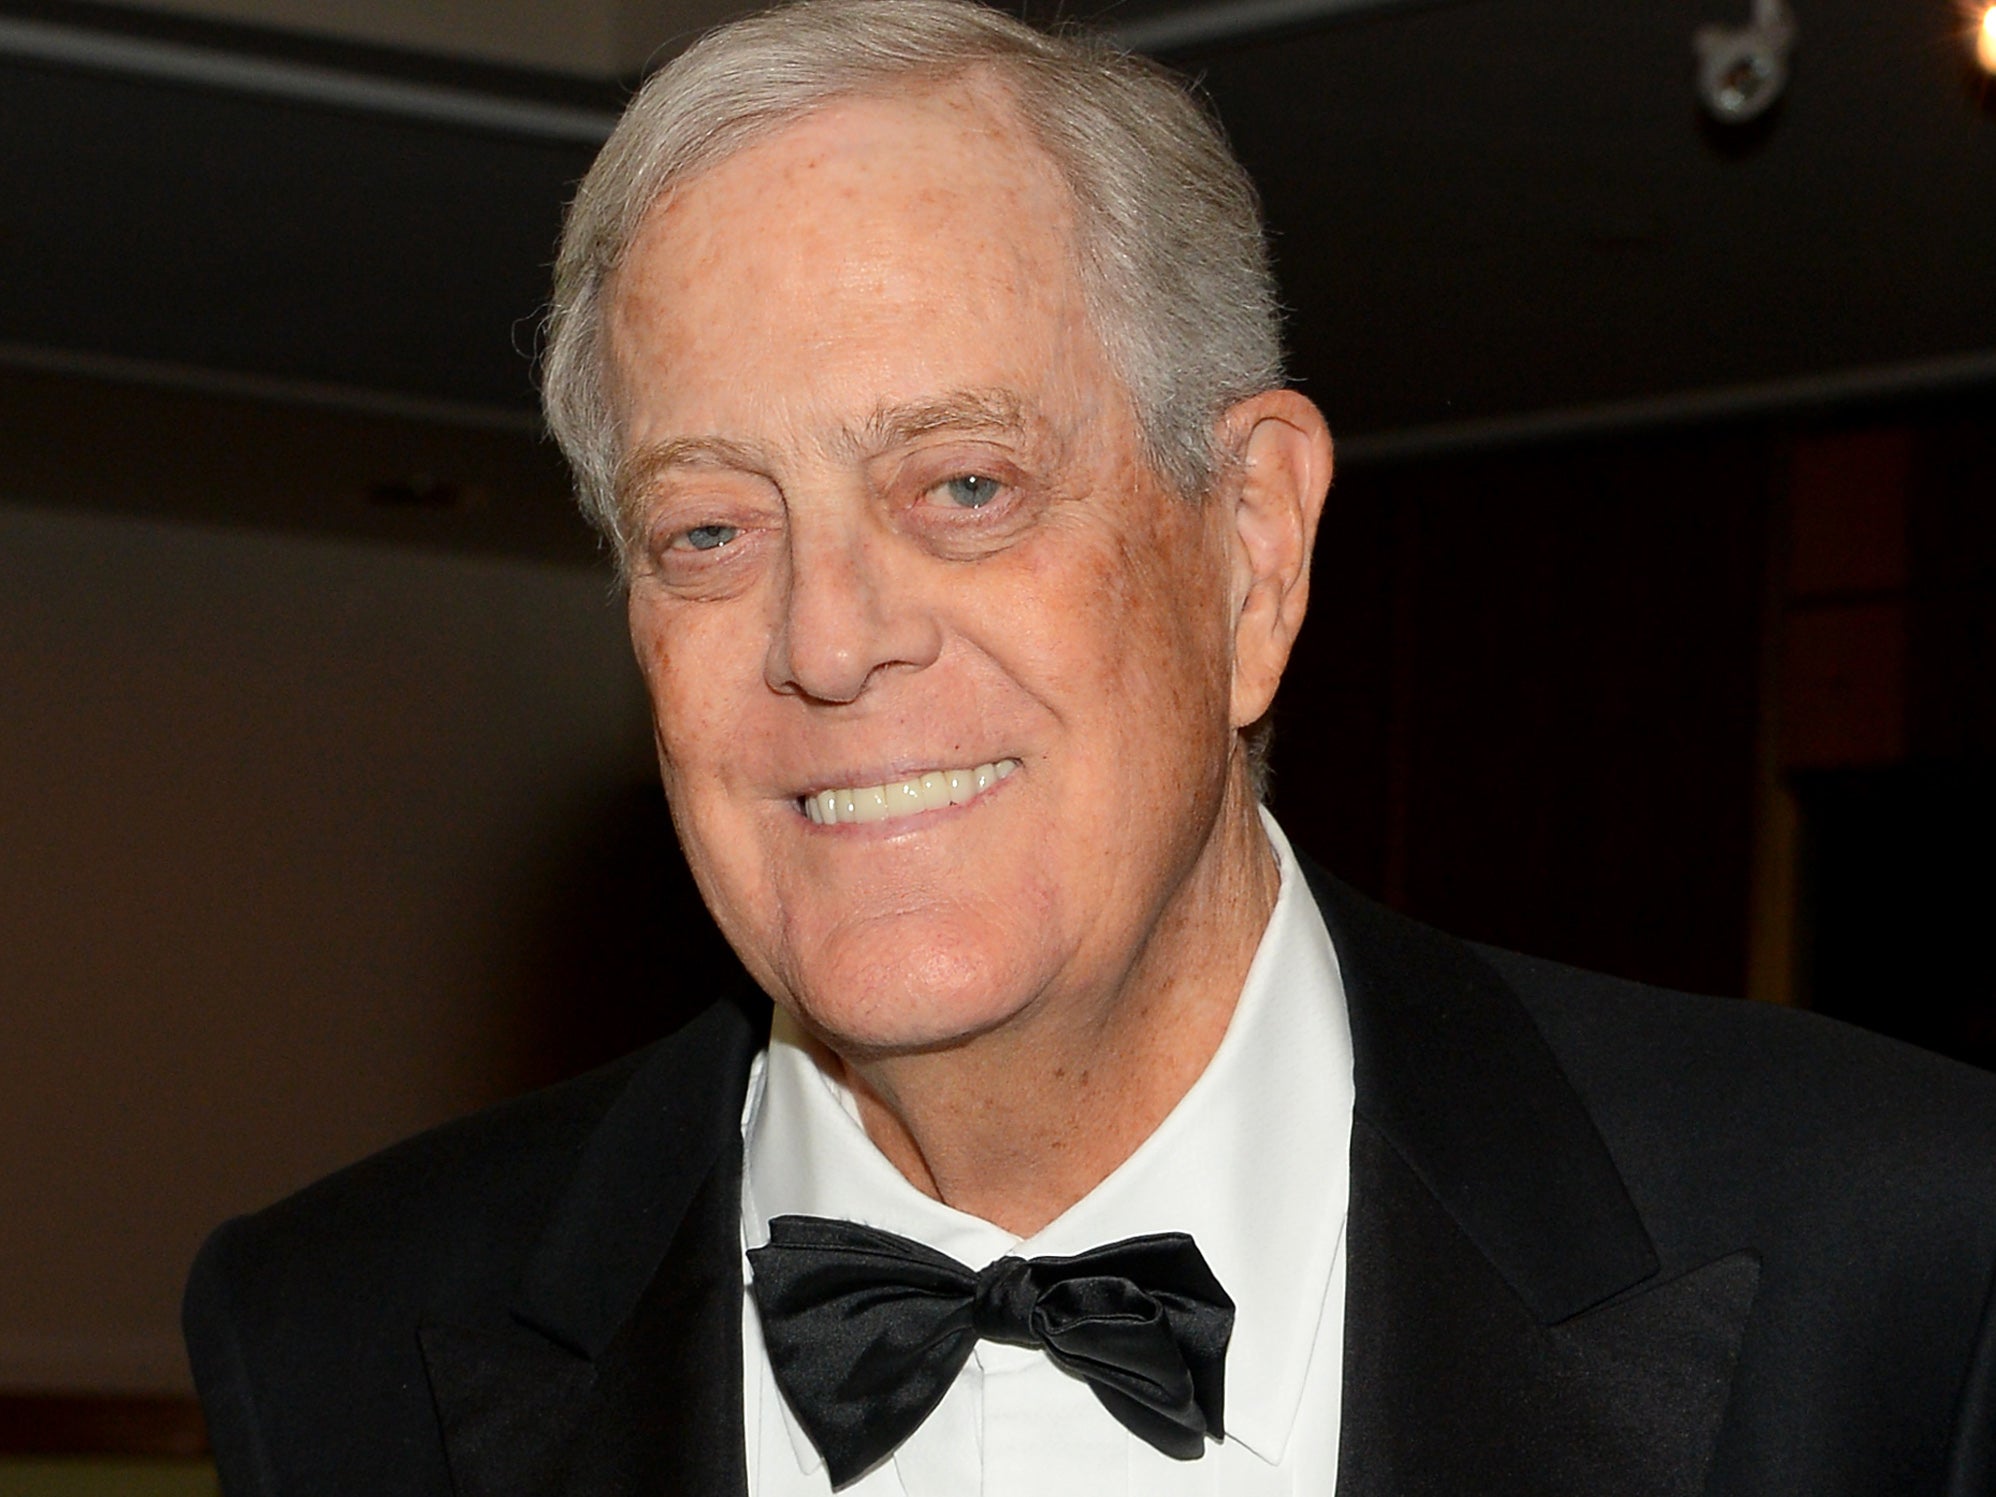 Billionaire businessman David Koch, brother of Charles Koch and Executive Vice President of Koch Industries